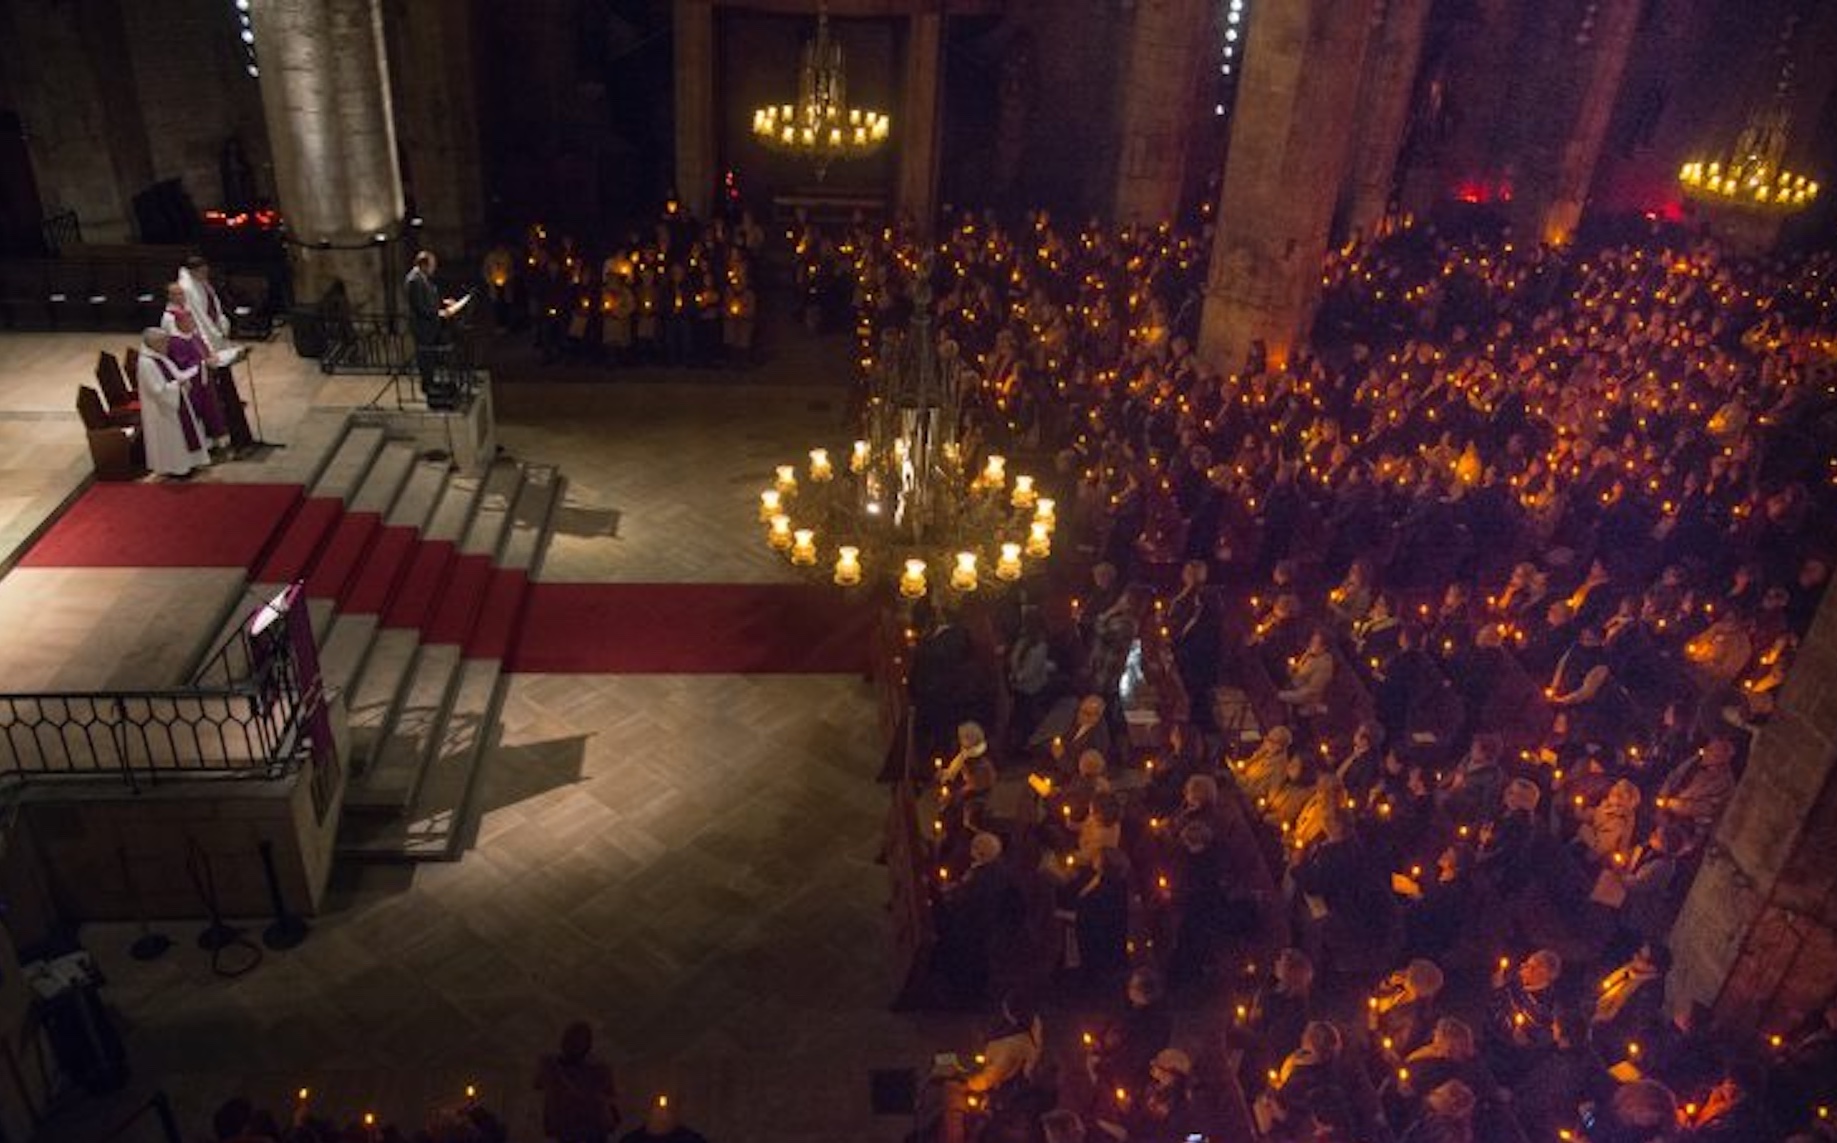 La misa memorial de Mémora – Serveis Funeraris de Barcelona congrego a cerca de 2.000 personas